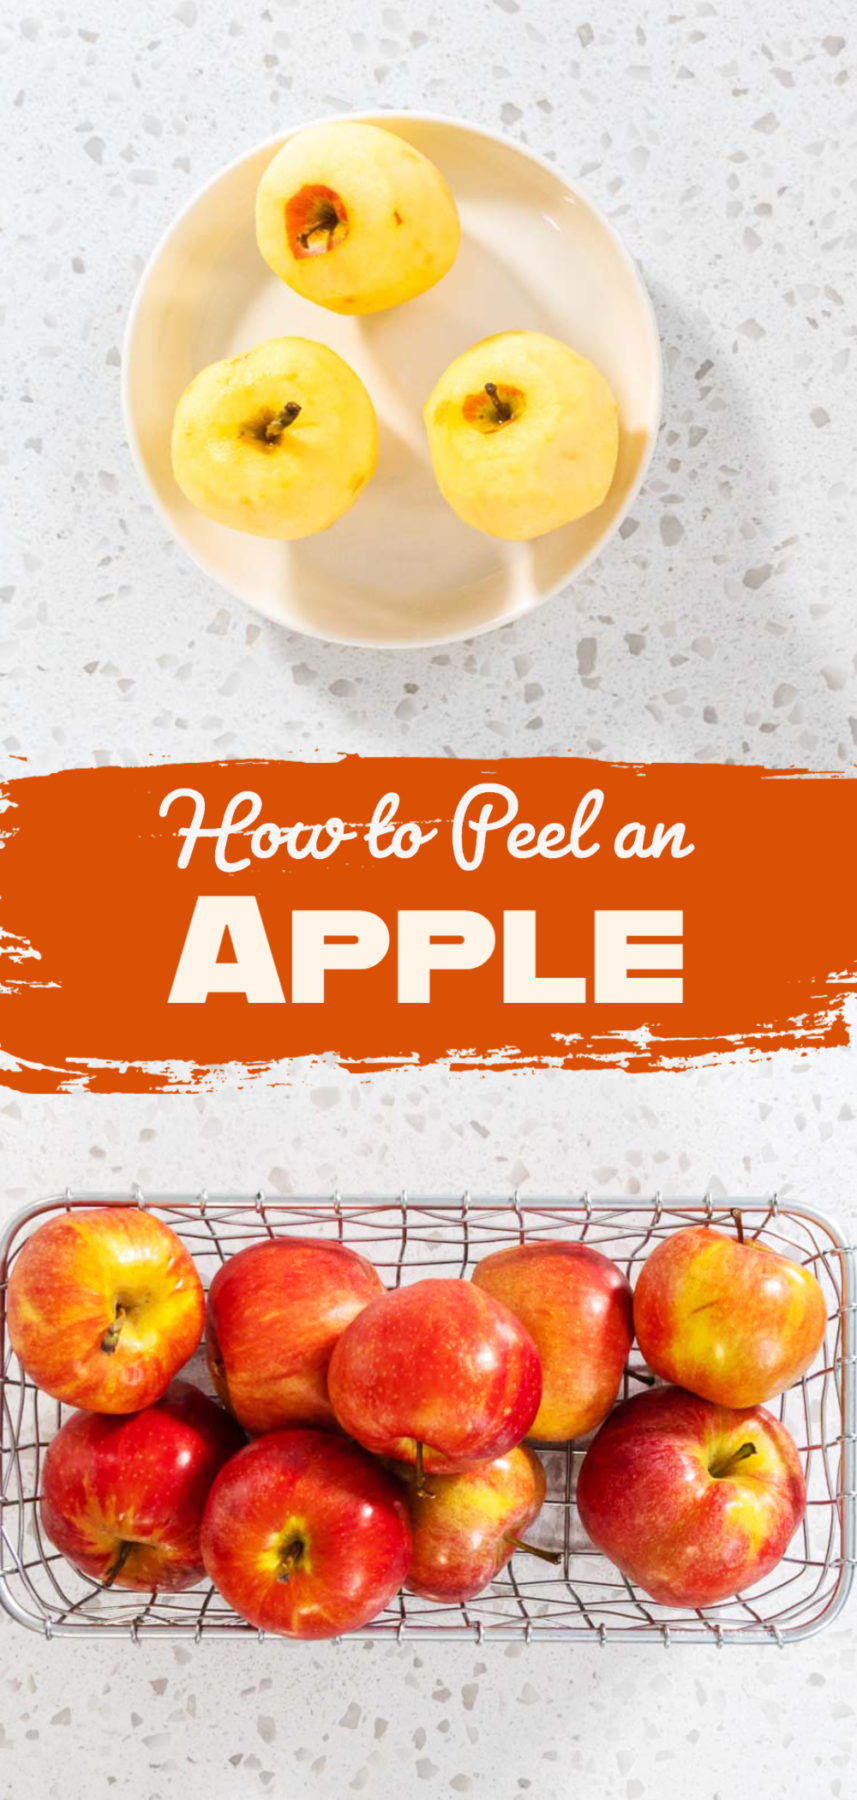 How to Peel an Apple